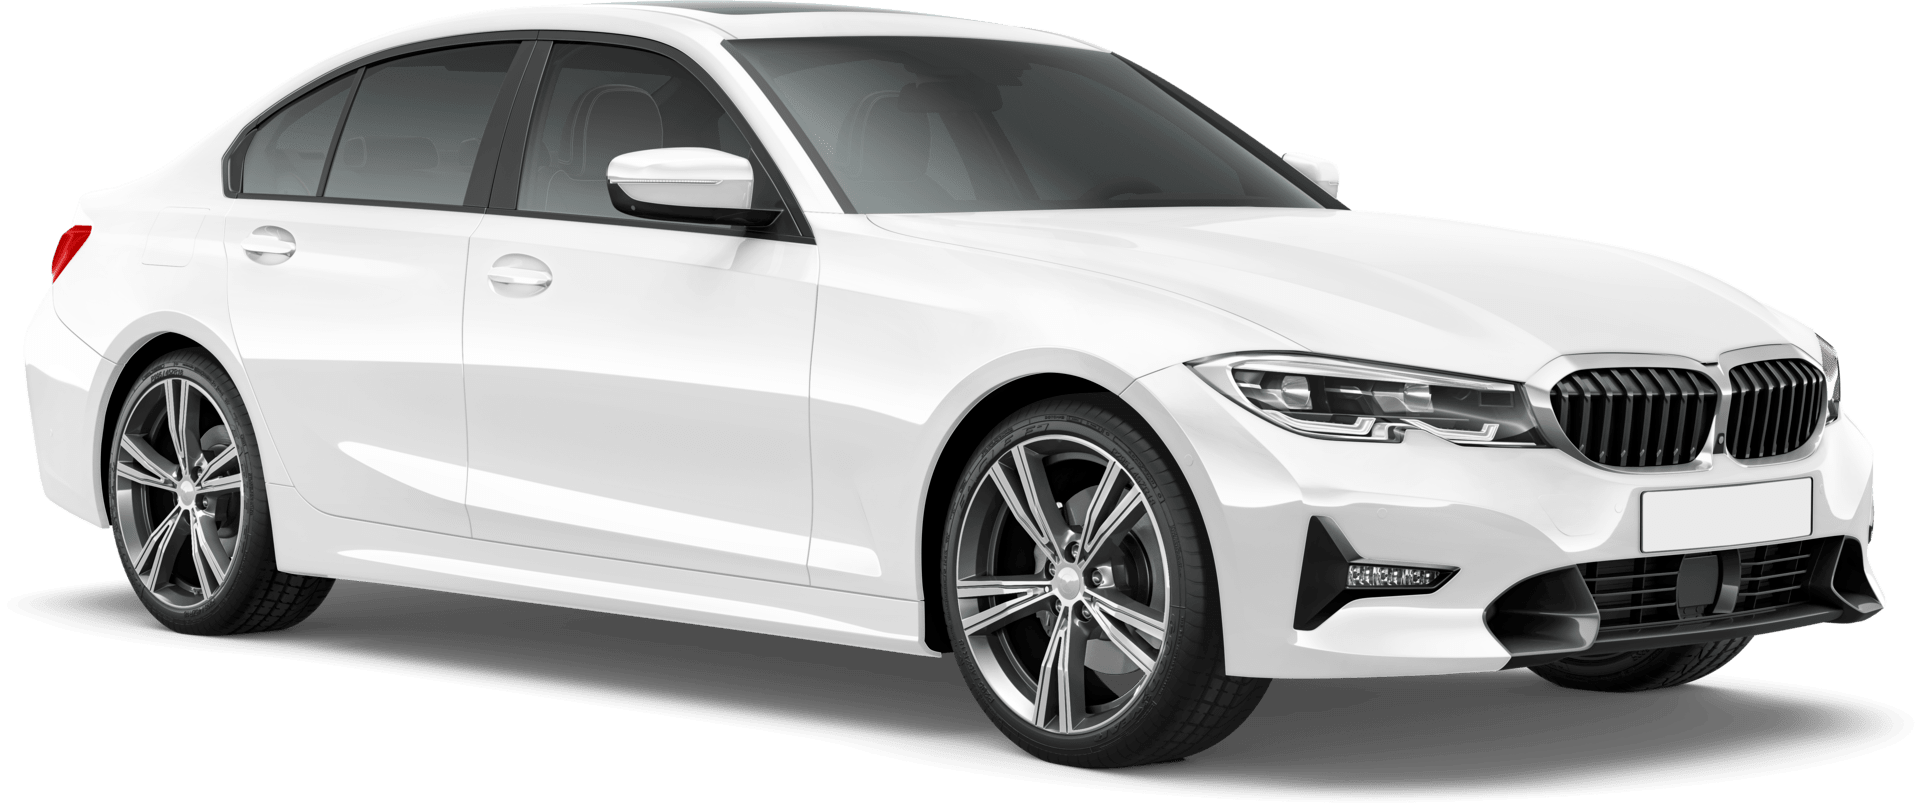 White luxury BMW sedan on a transparent background